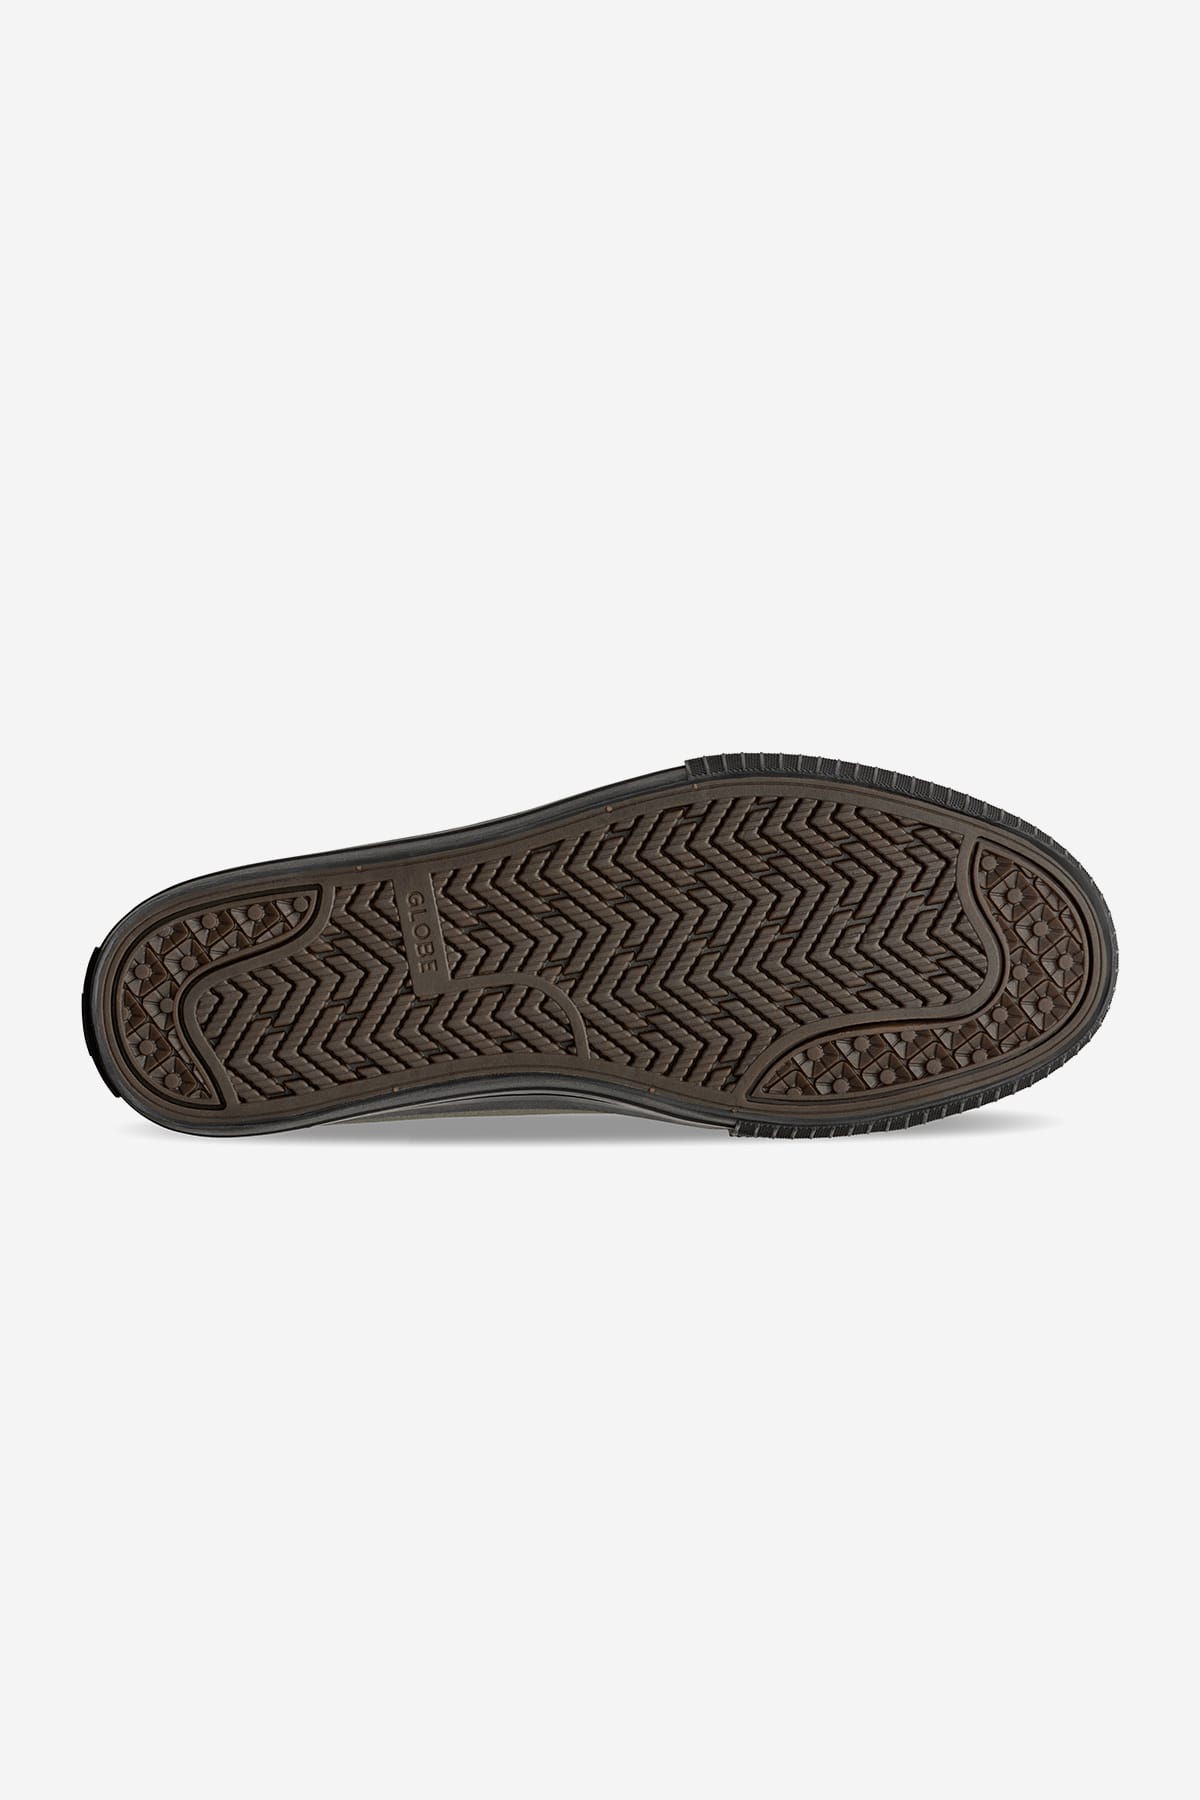 Globe - Gillette - Noir Olive/Noir - skateboard Chaussures